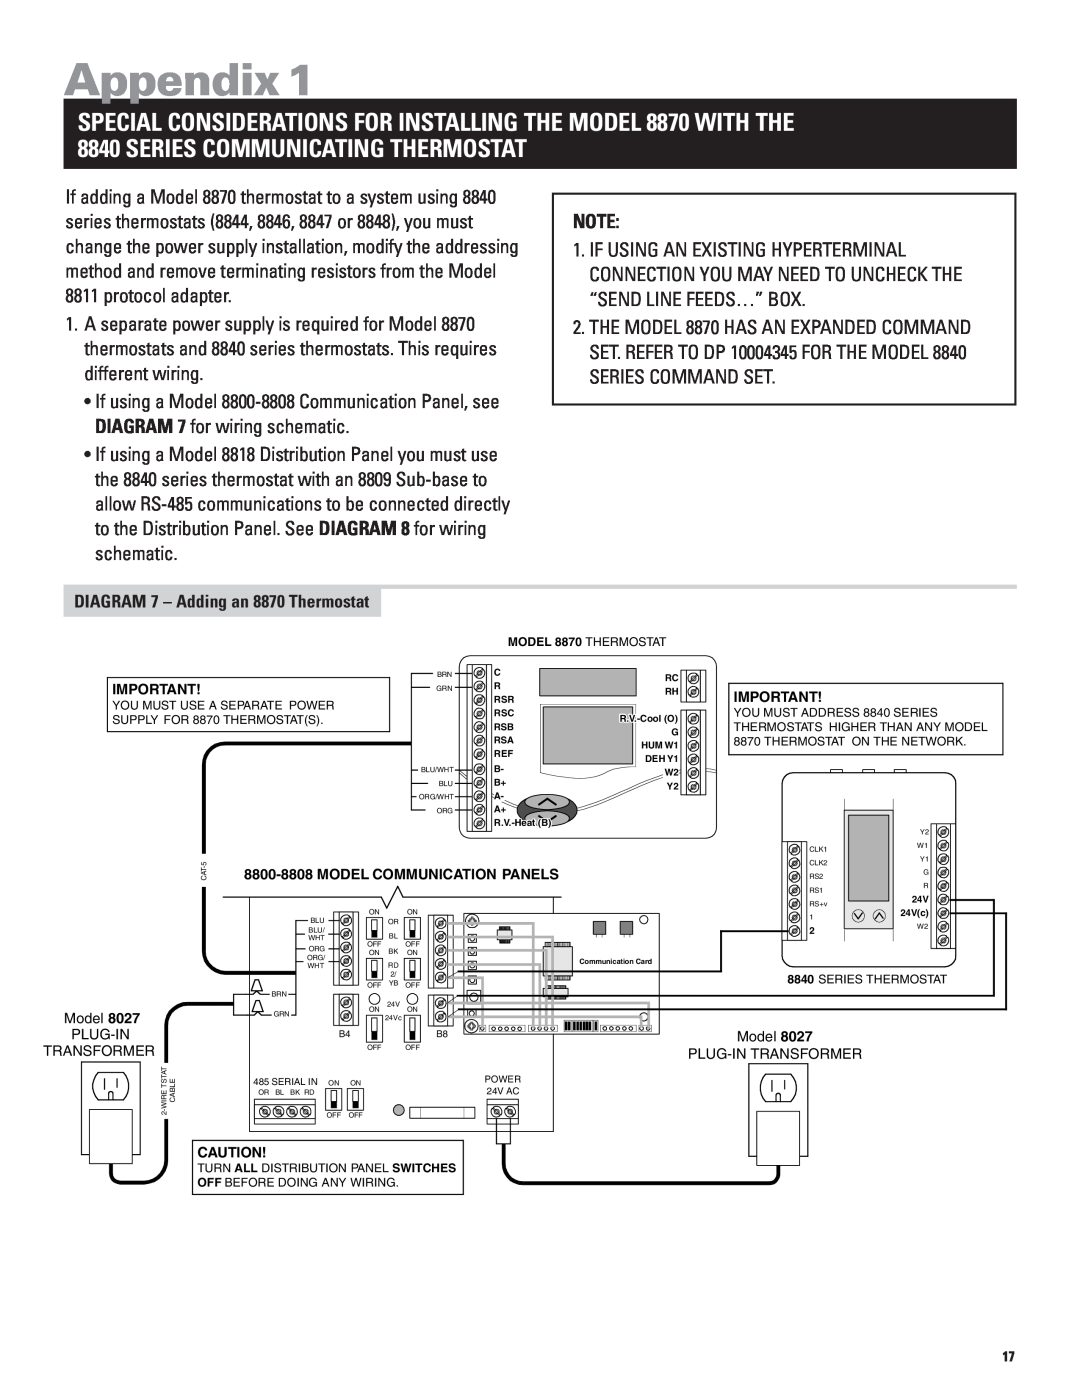 Echo installation manual Appendix, DIAGRAM 7 - Adding an 8870 Thermostat 